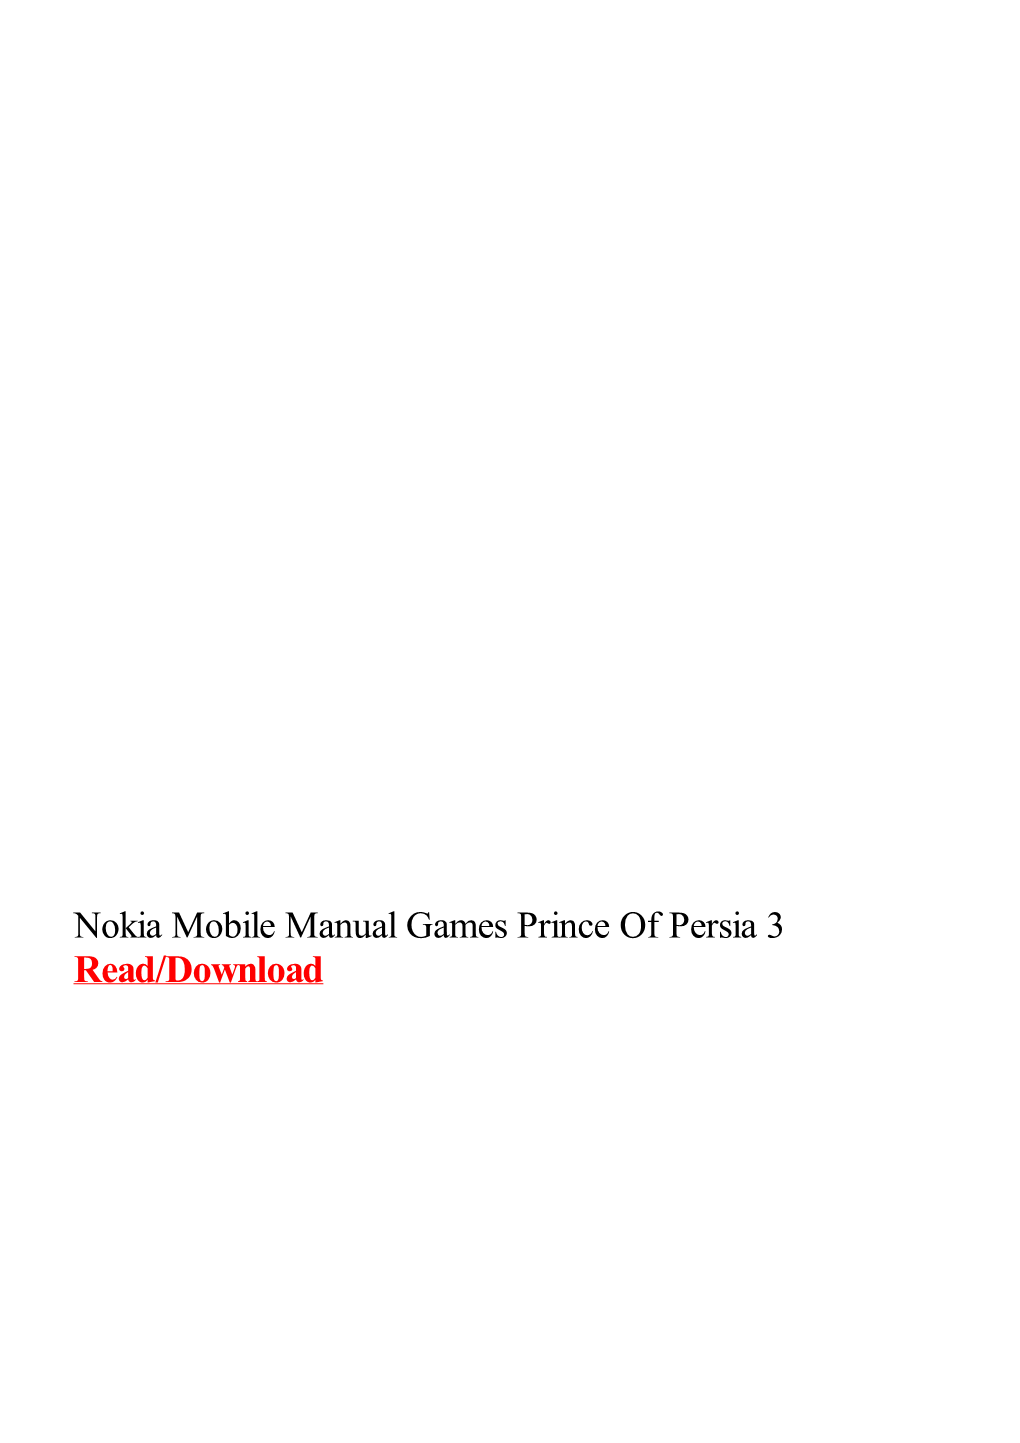 Nokia Mobile Manual Games Prince of Persia 3.Pdf